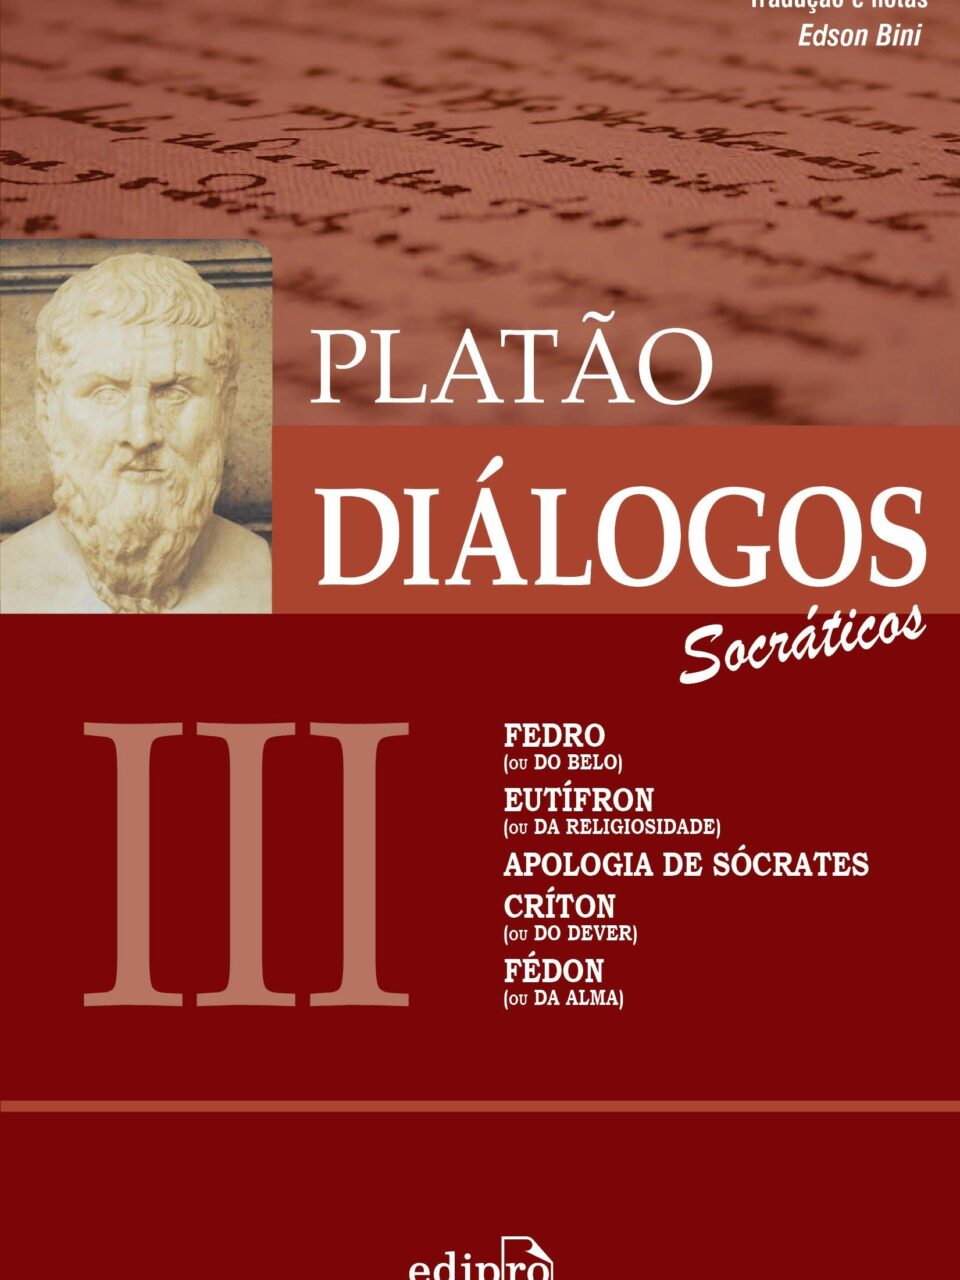 Diálogos III – Fedro, Eutífron, Apologia de Sócrates, Críton, Fédon – Platão